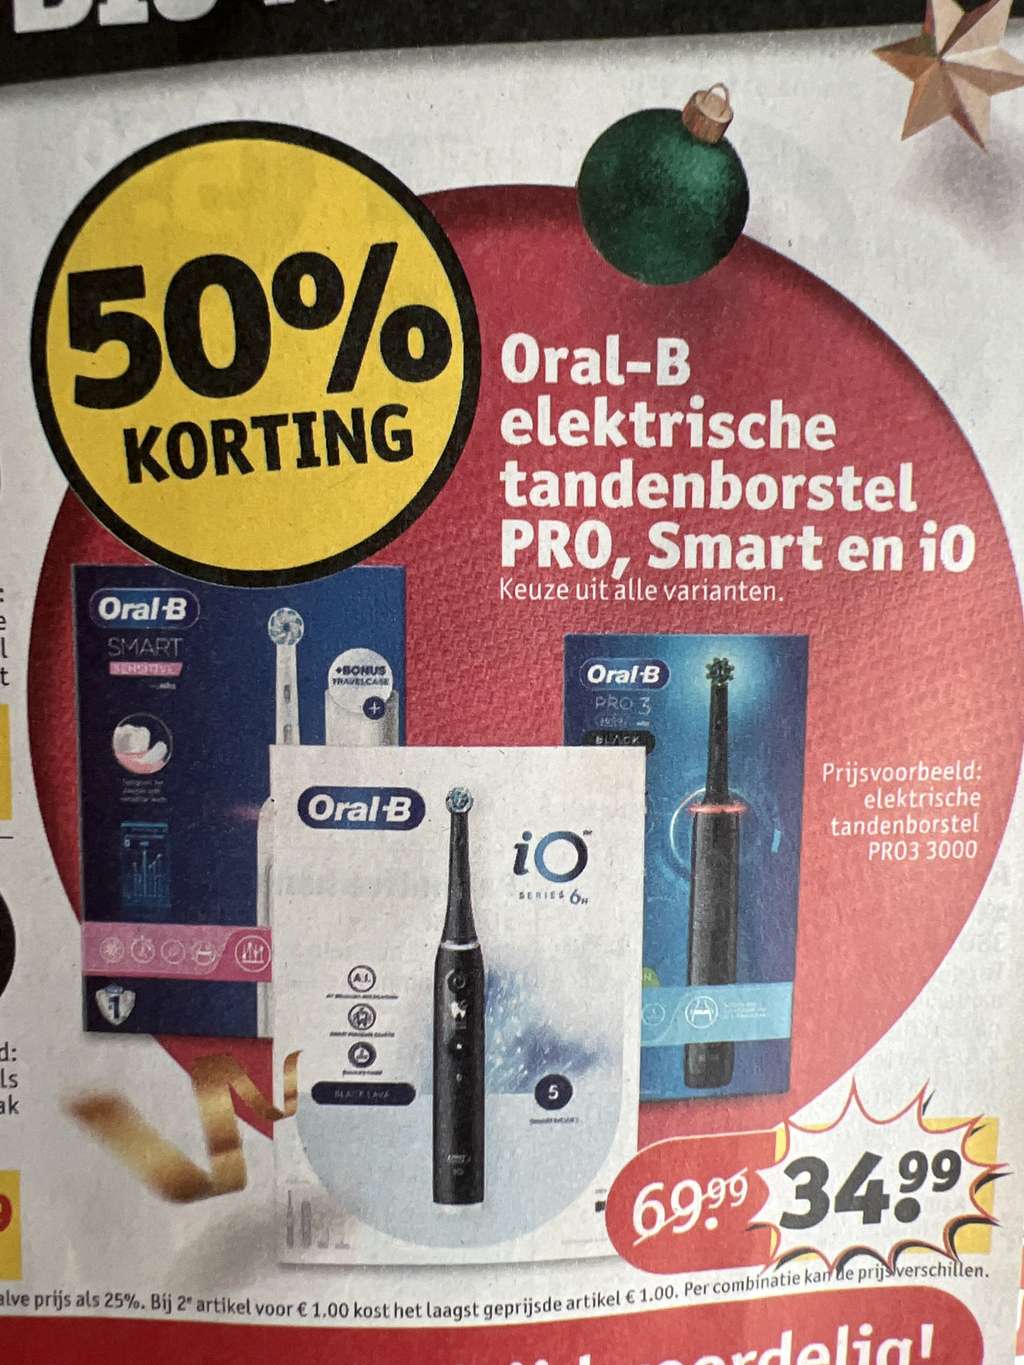 erosie Postcode sector 50% korting op Oral-B elektrische tandenborstels - Pepper.com